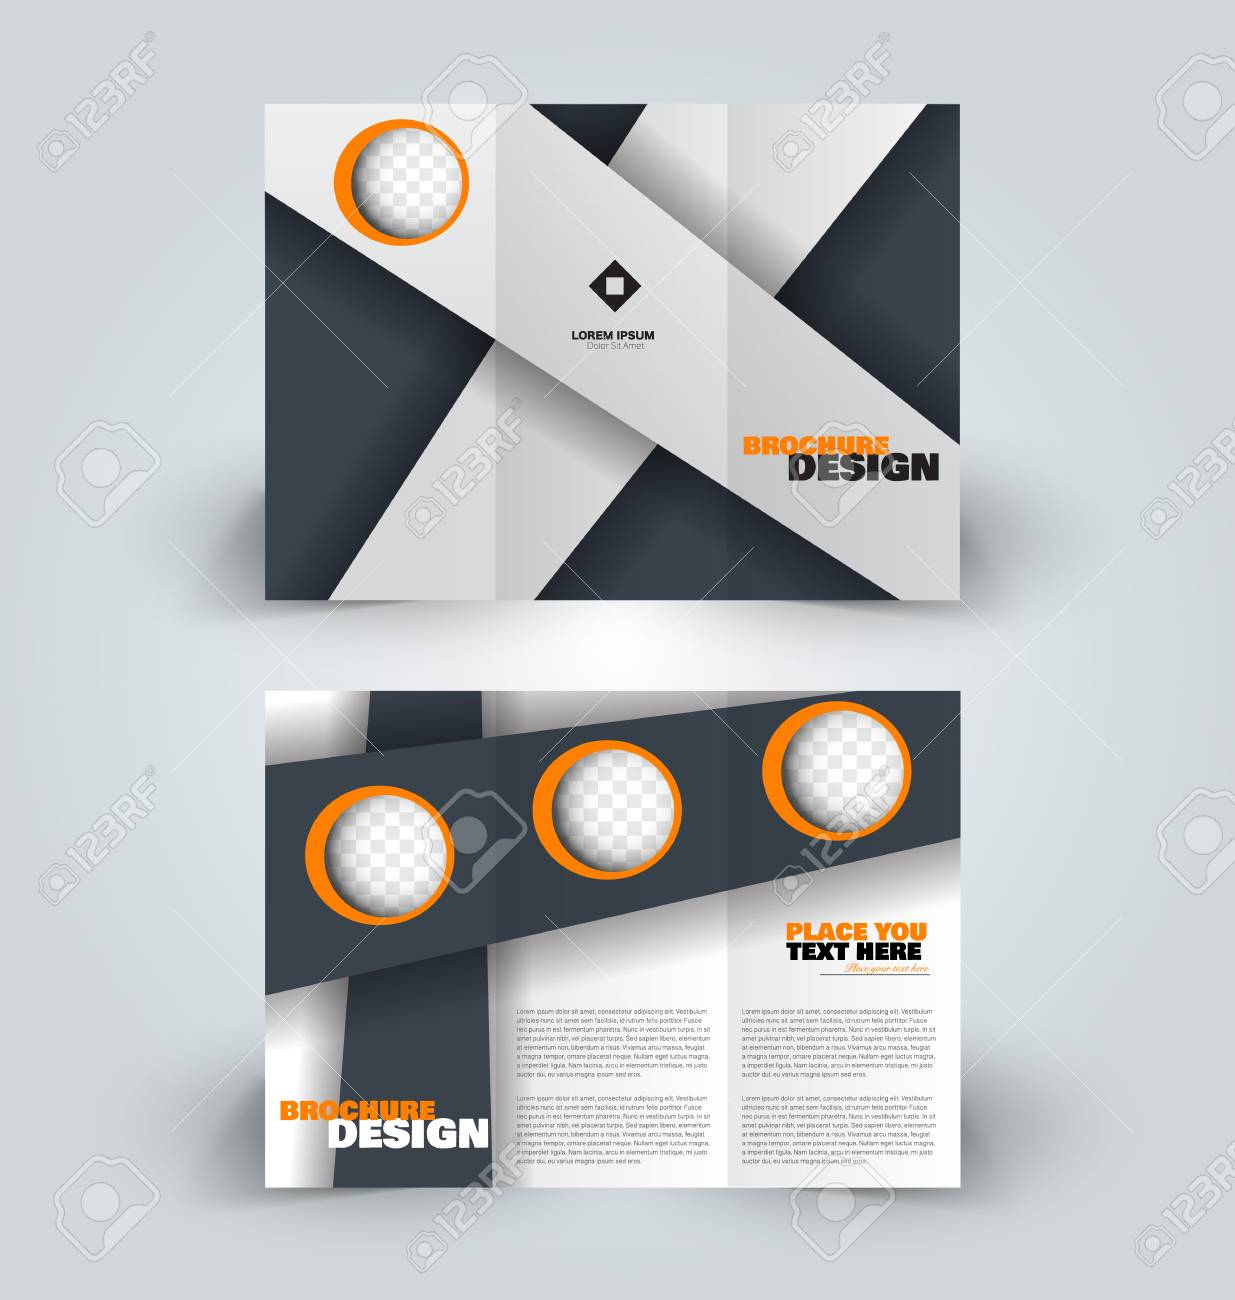 Brochure Template. Creative Design Trend For Professional Corporate.. In Professional Brochure Design Templates